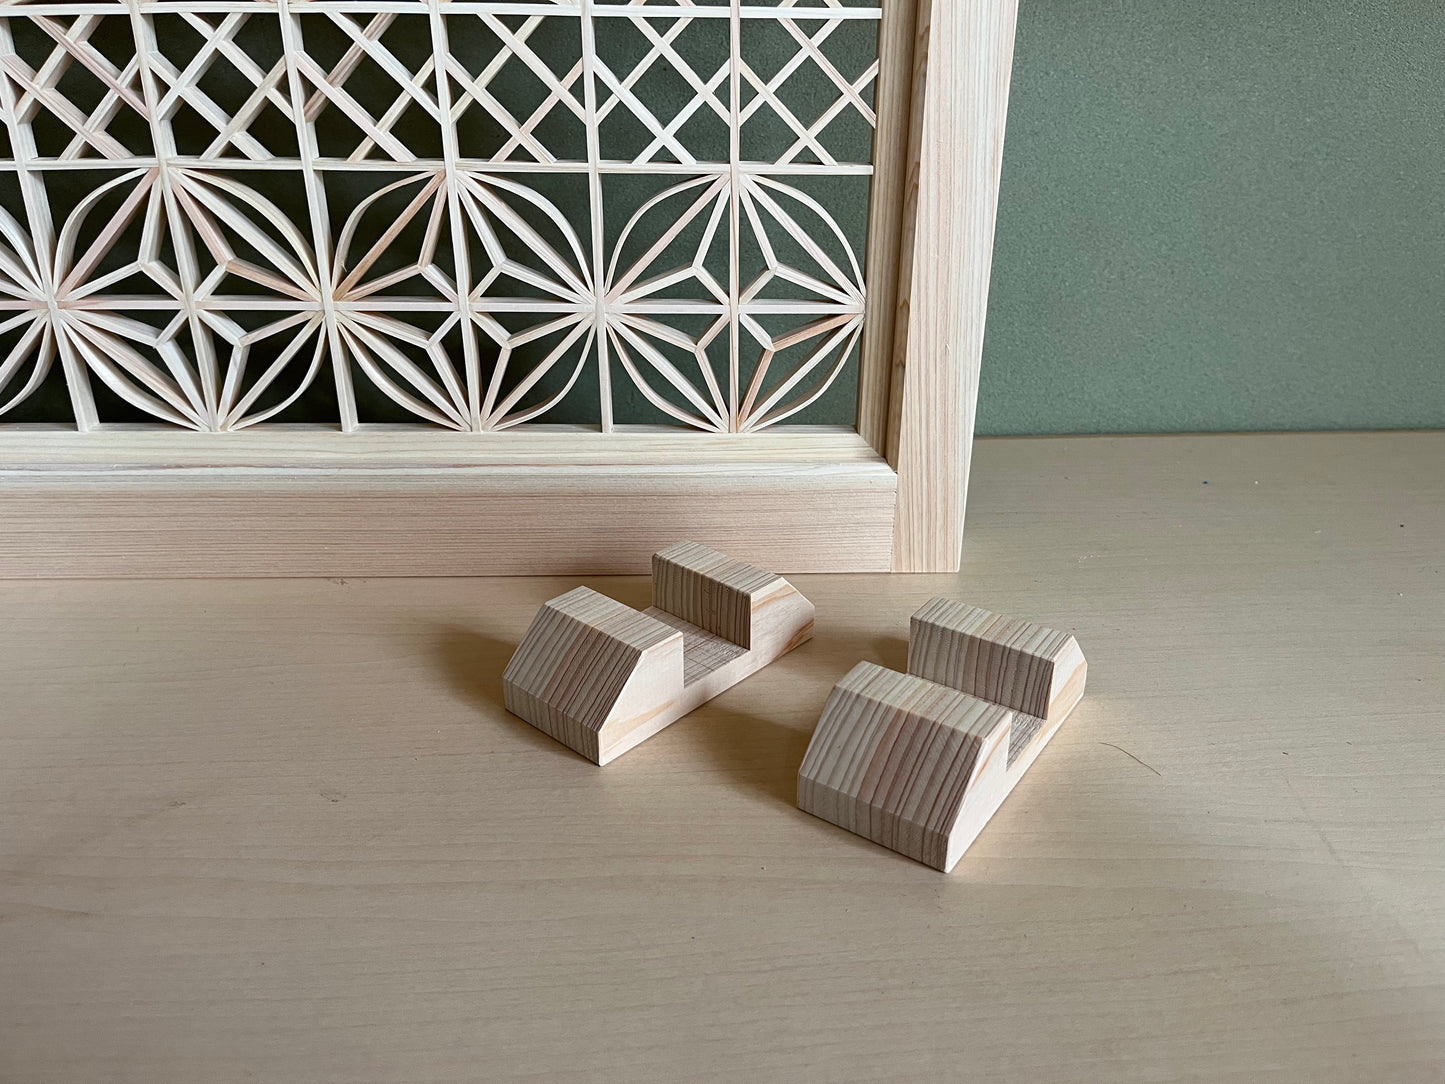 Kumiko work art panel L pattern 6 domestic cypress with dedicated stand